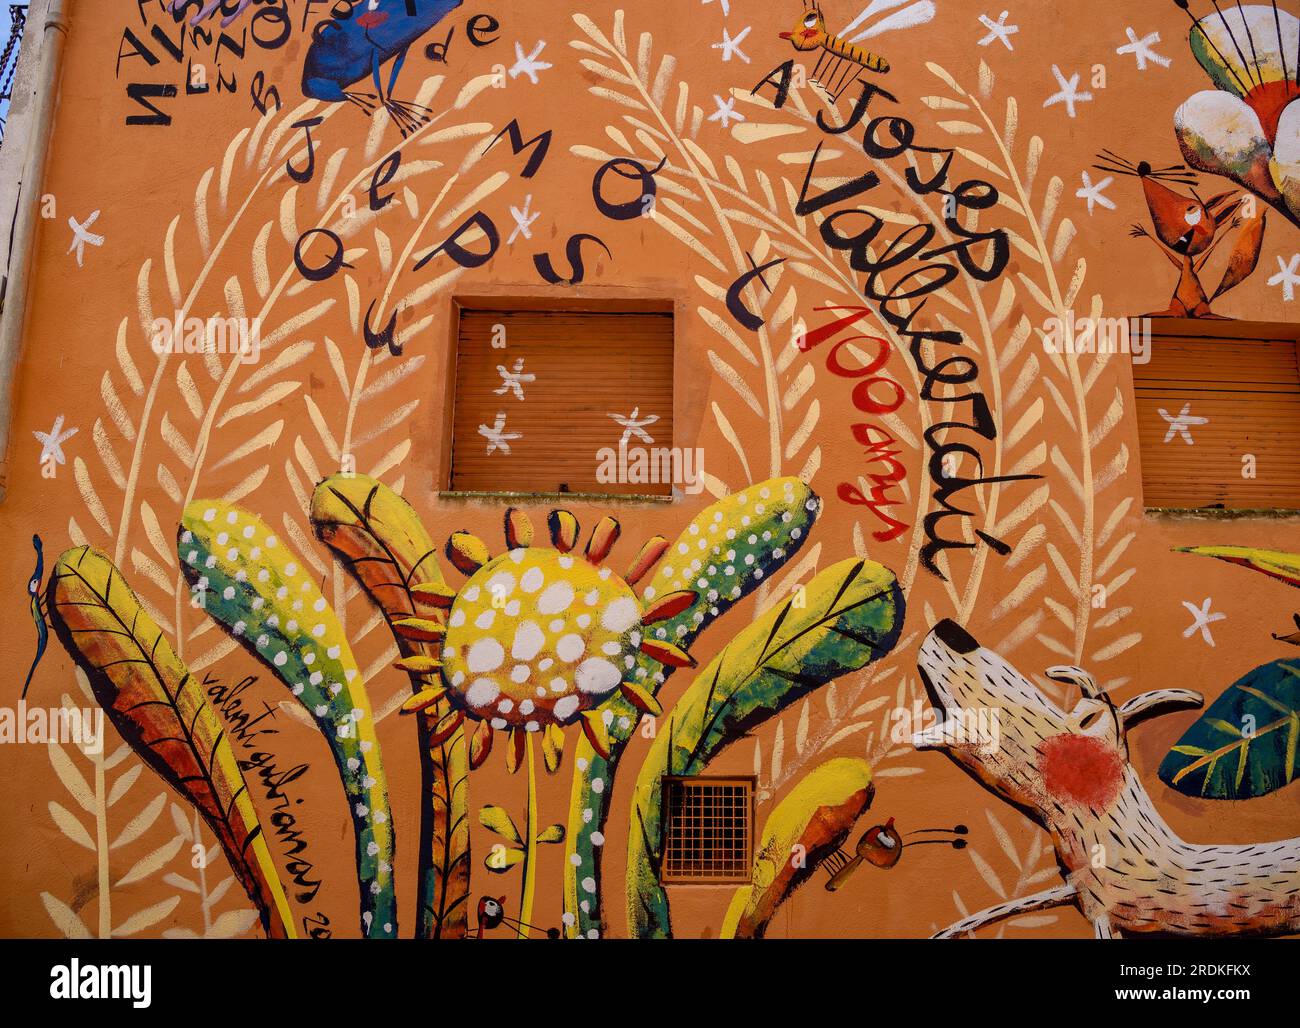 Murales dipinti su case della città di Penelles dopo il festival di Gar-Gar (la Noguera, Lleida, Catalogna, Spagna) ESP: Murales pintados en Penelles Foto Stock